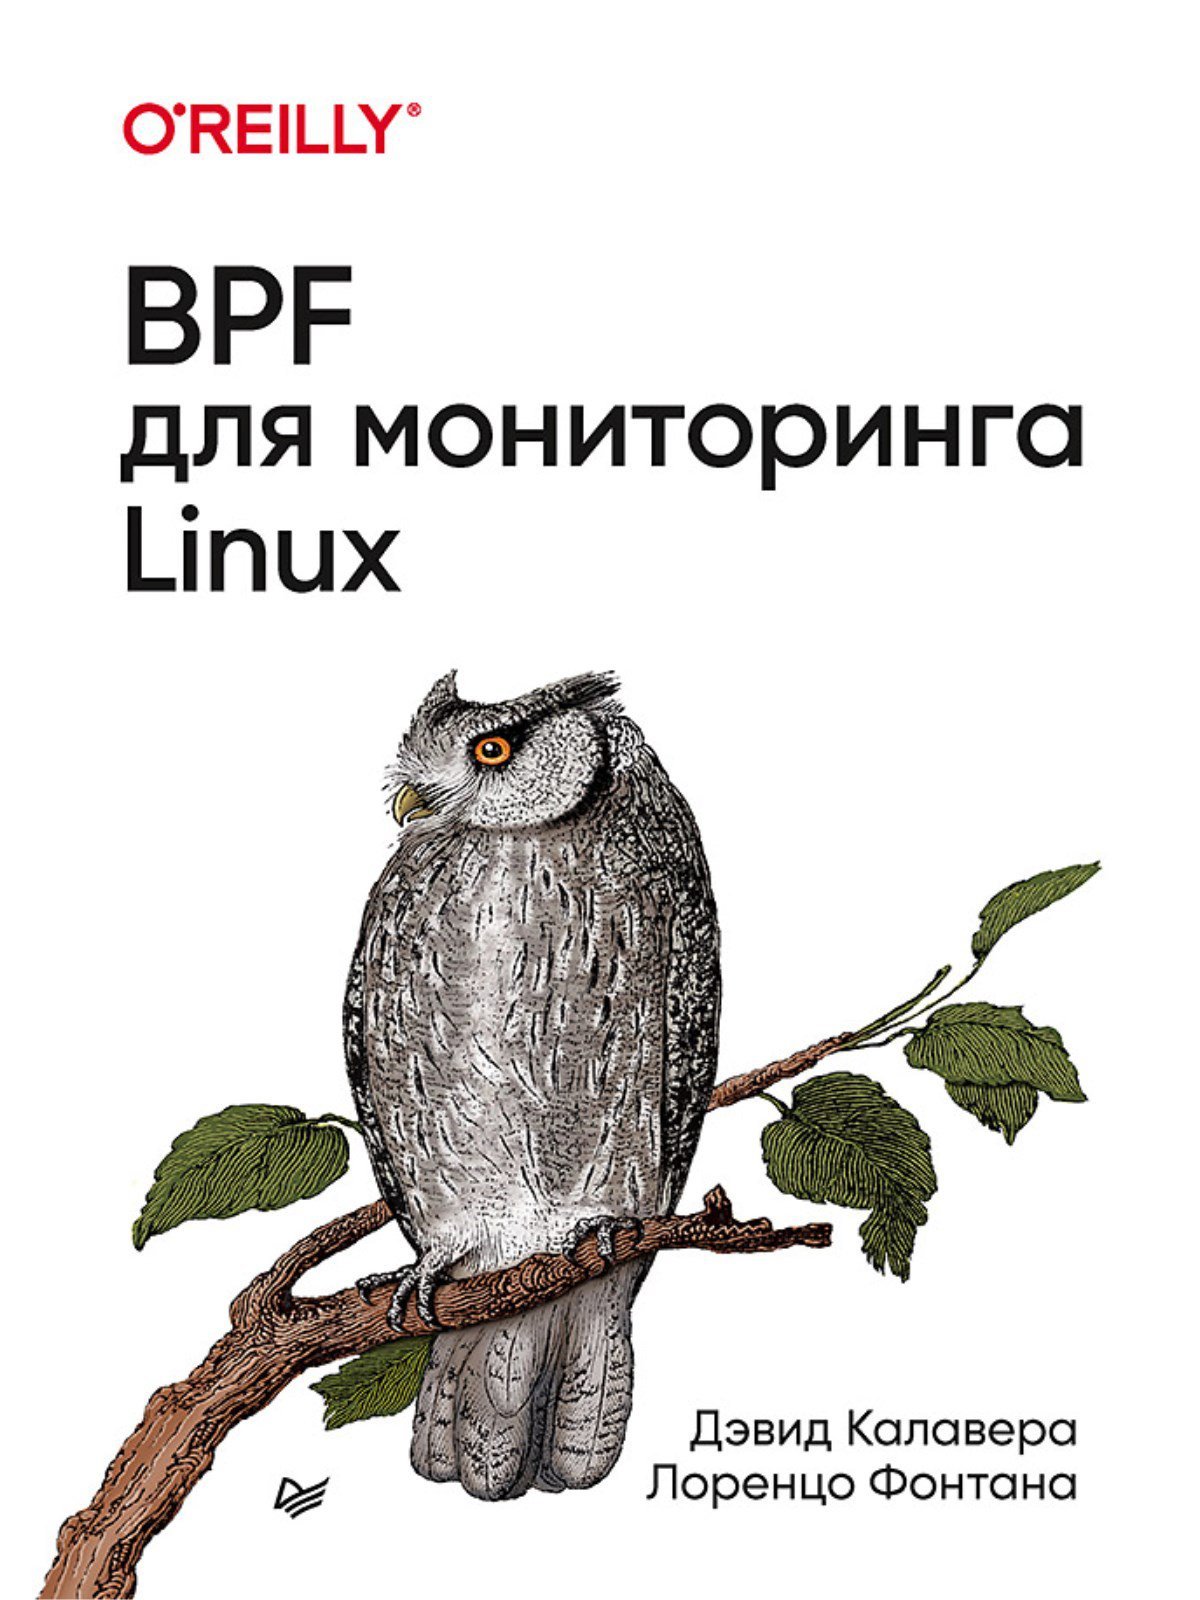 BPF   Linux